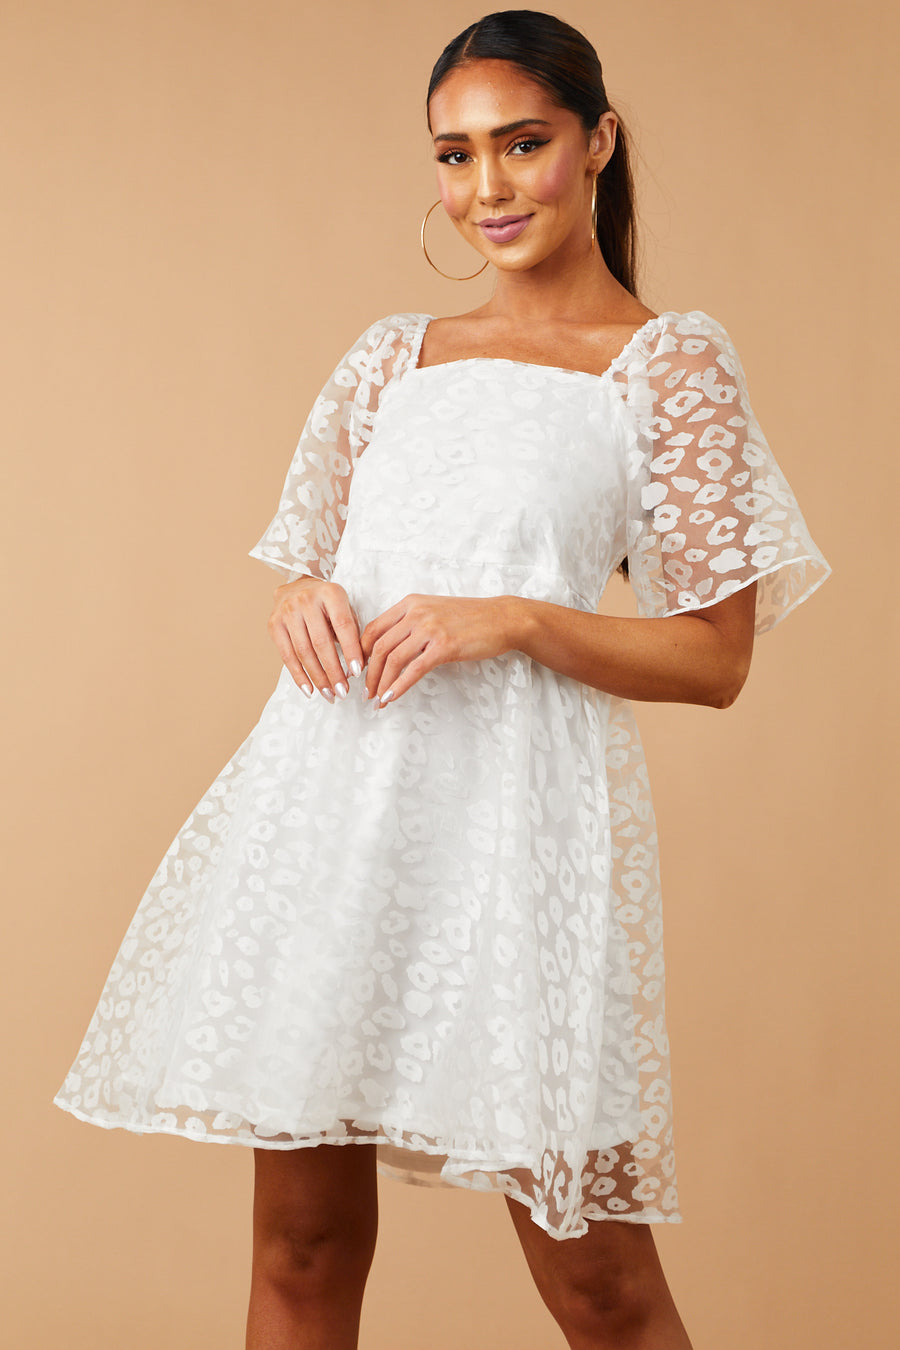 White Leopard Print Short Sleeve Mini Dress